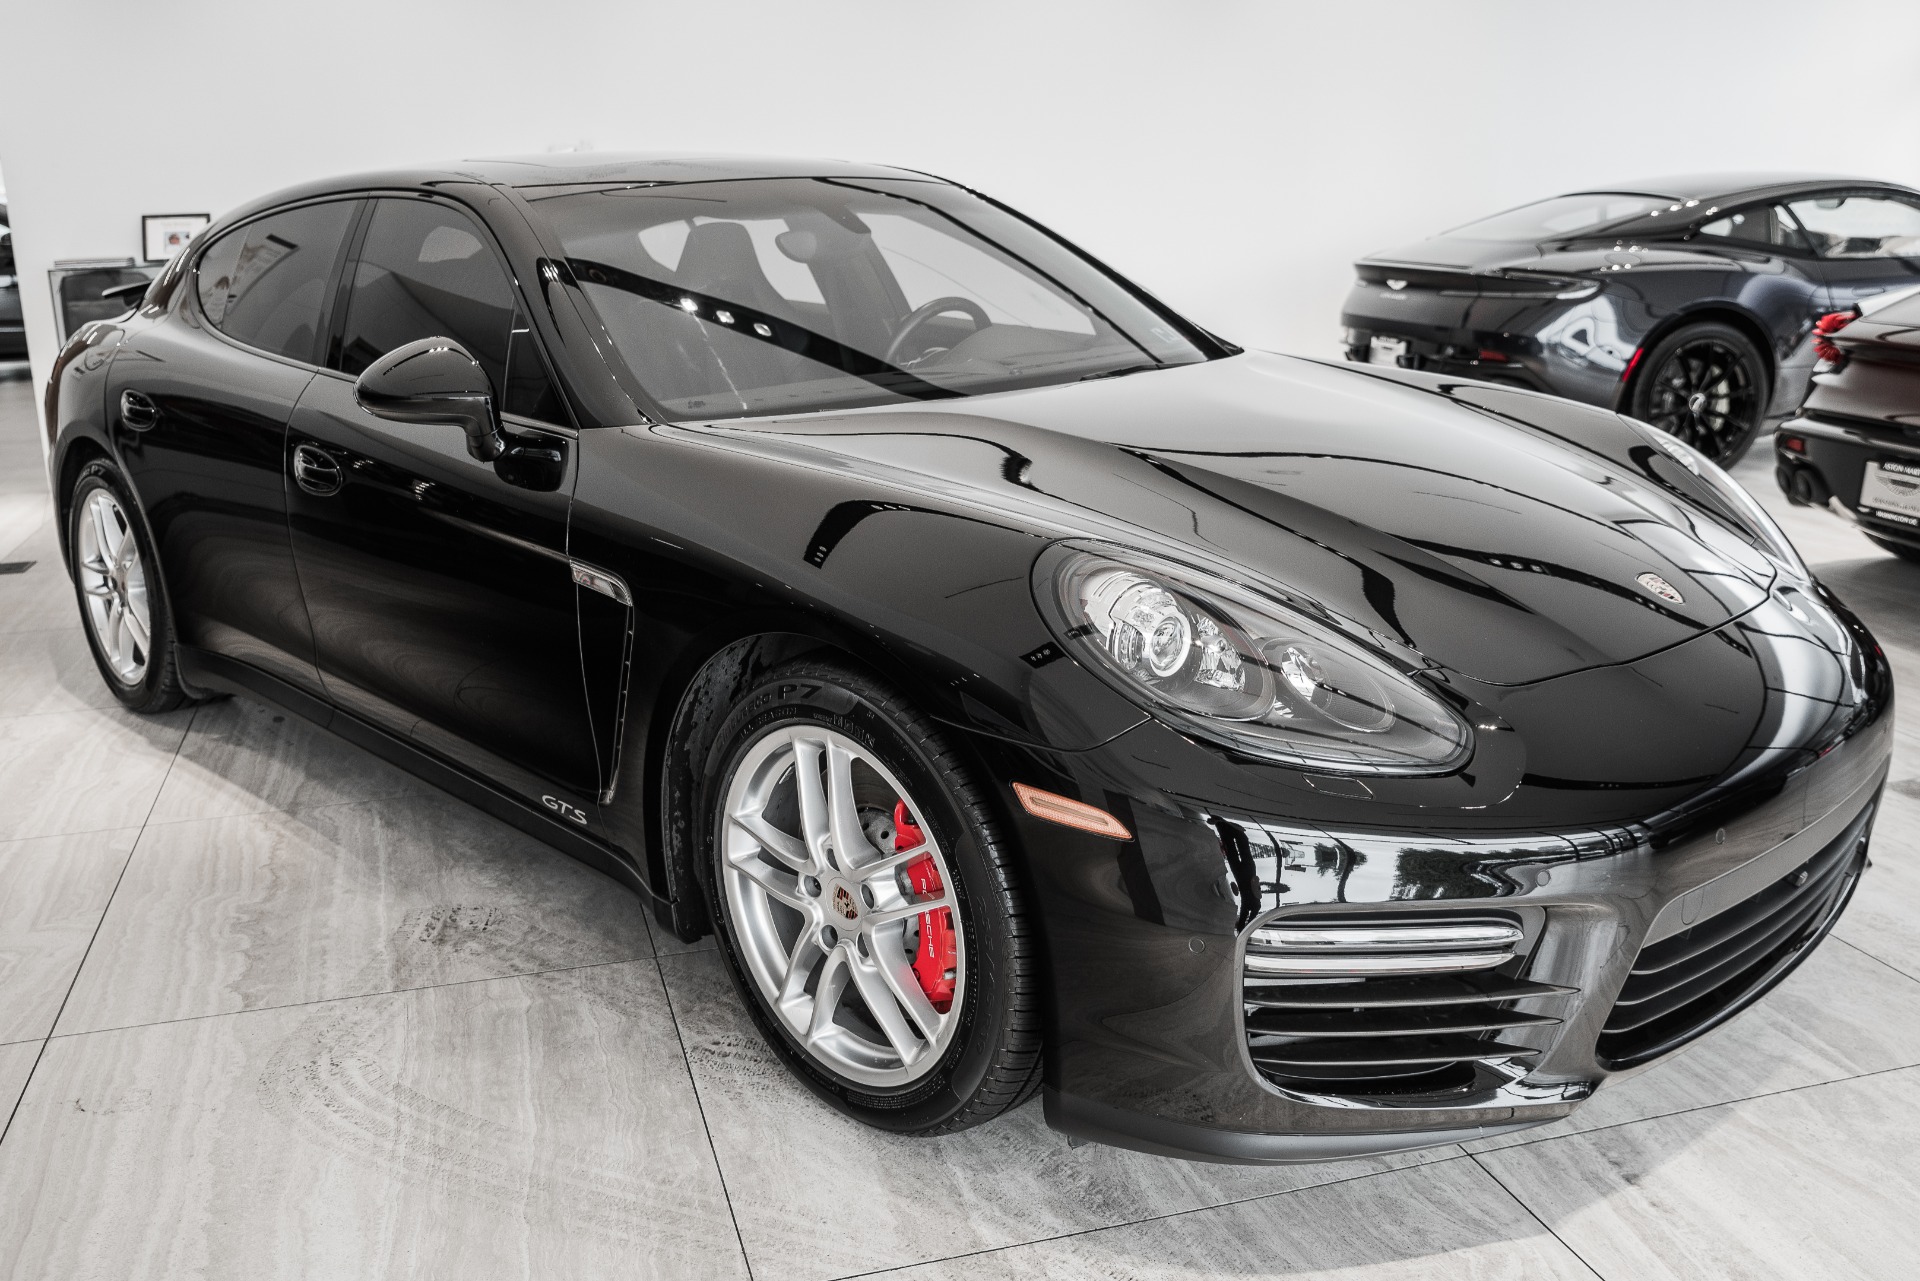 2016 Porsche Panamera GTS Stock # P081637 for sale near Vienna, VA | VA ...